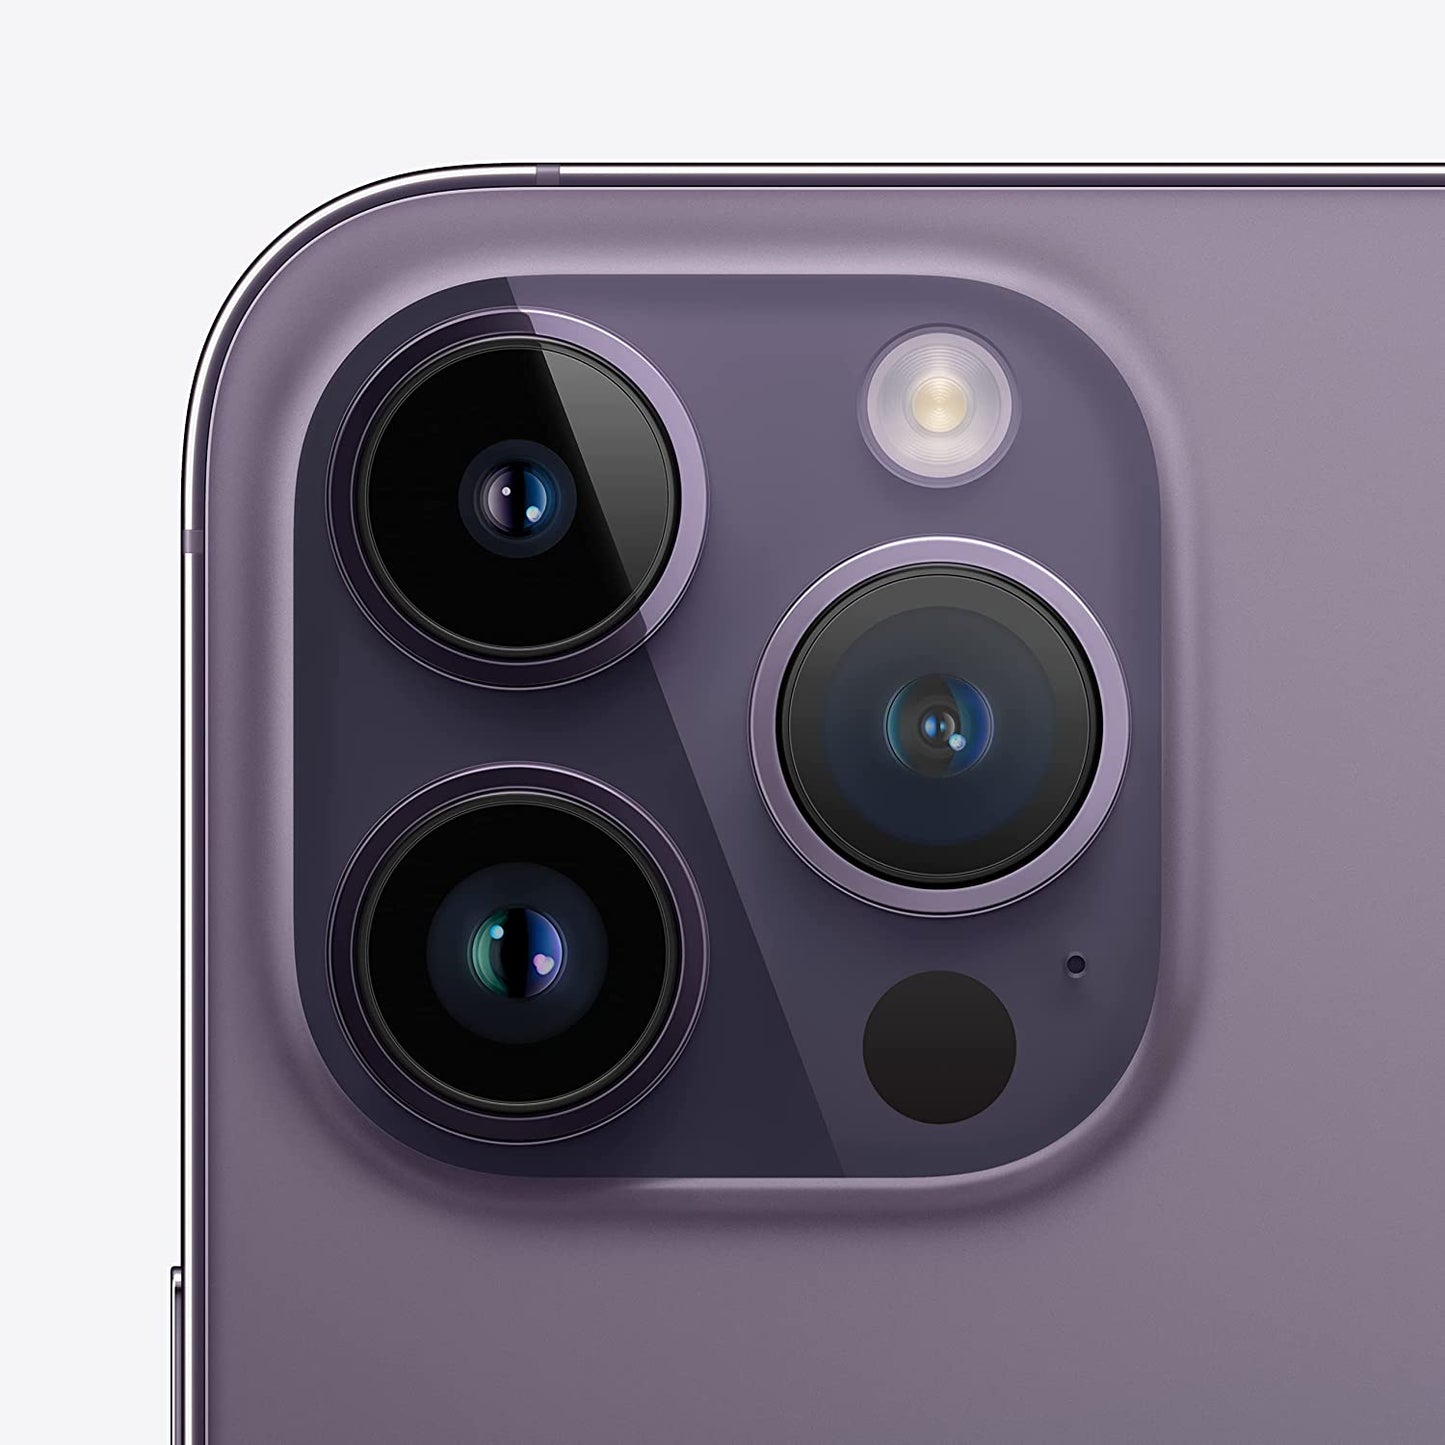 Apple iPhone 14 Pro (128GB) - Dark Purple 